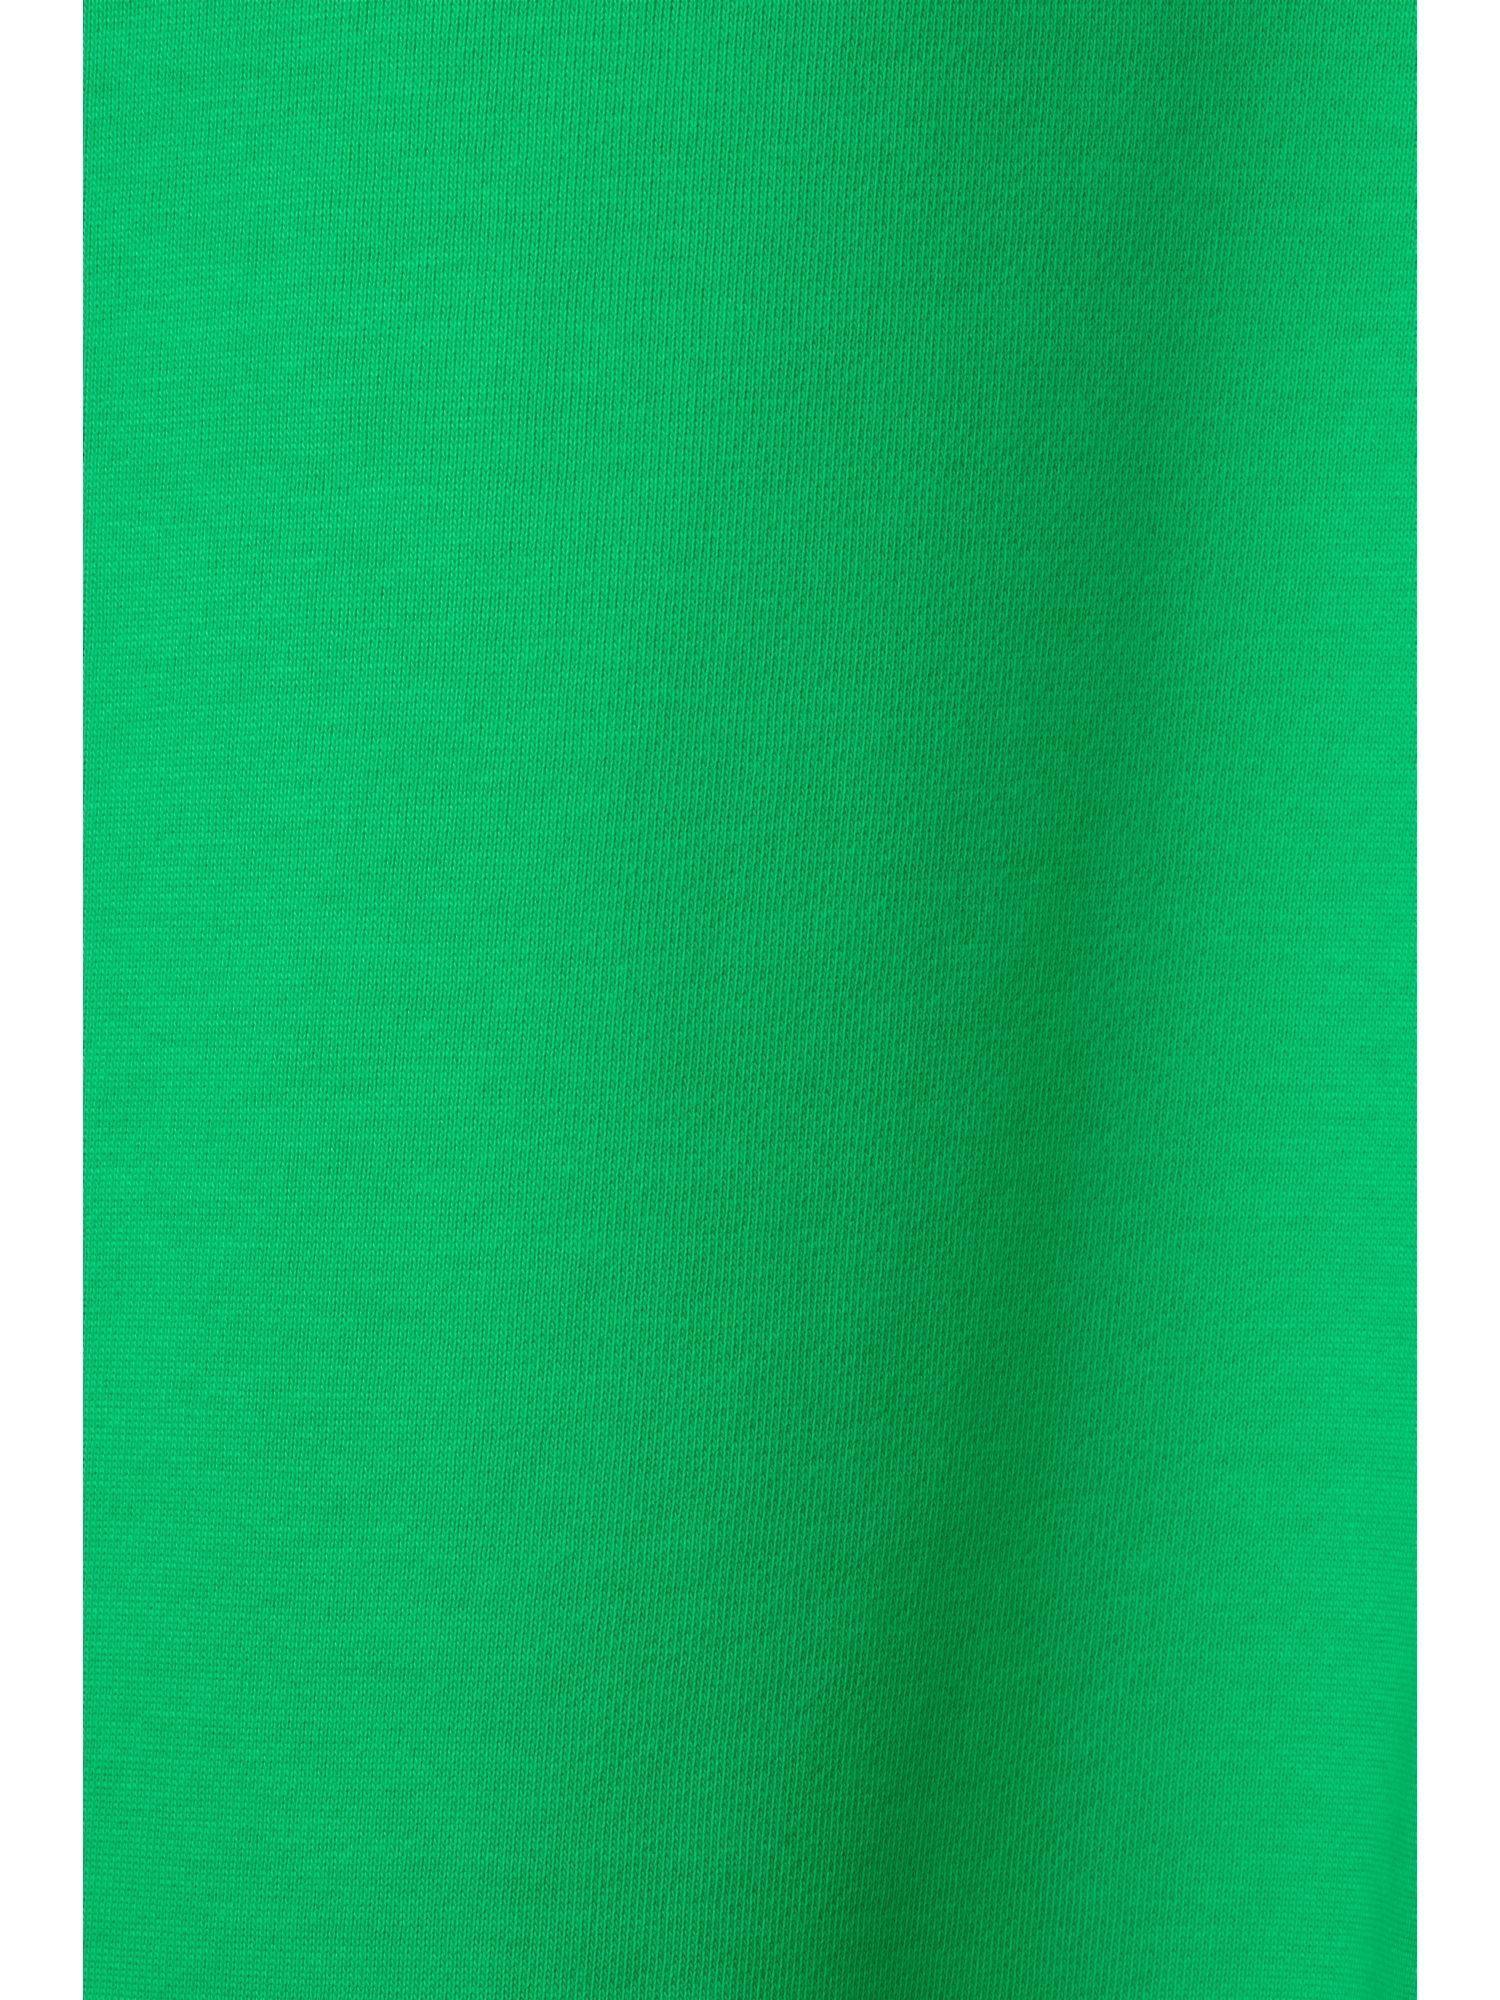 Esprit Jogginghose Logo-Sweatpants aus Baumwollfleece GREEN